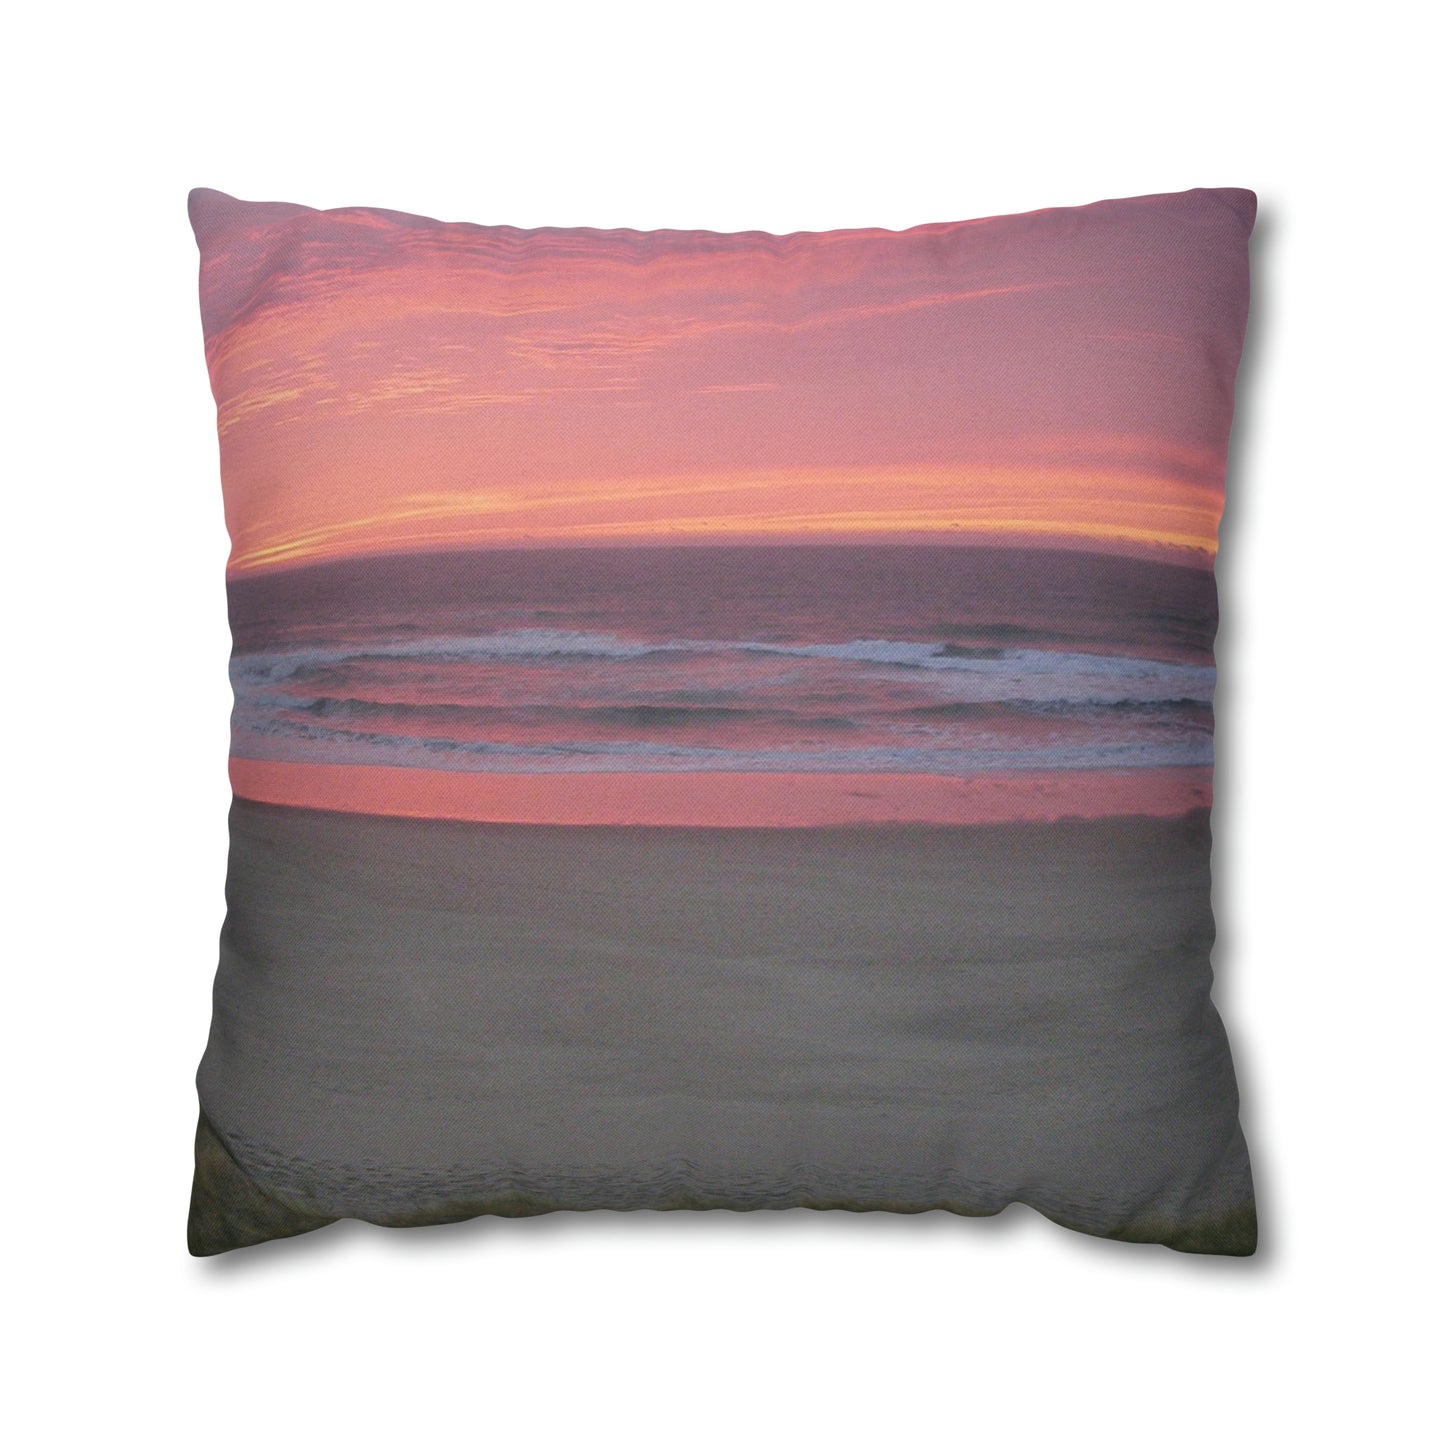 Pink Ocean Sunset Spun Polyester Pillow Case